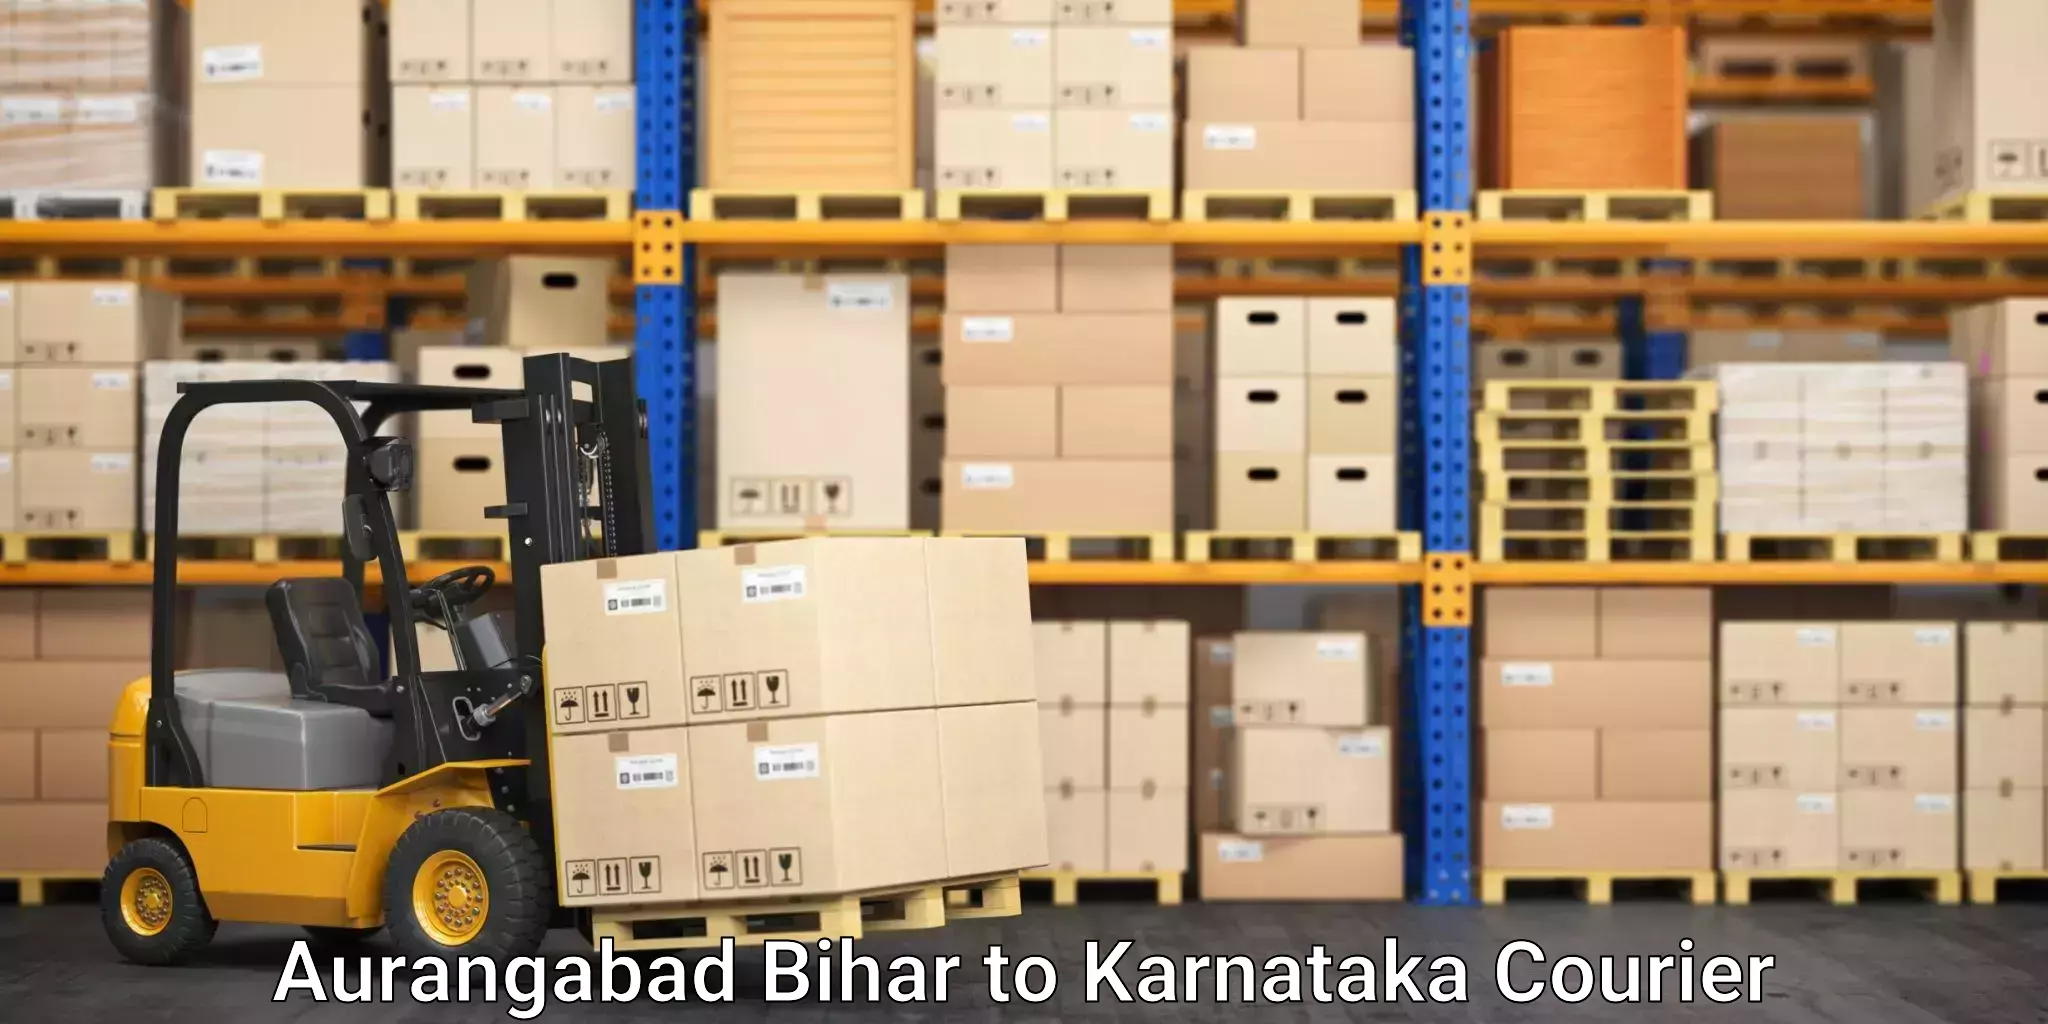 Furniture transport specialists Aurangabad Bihar to Bengaluru